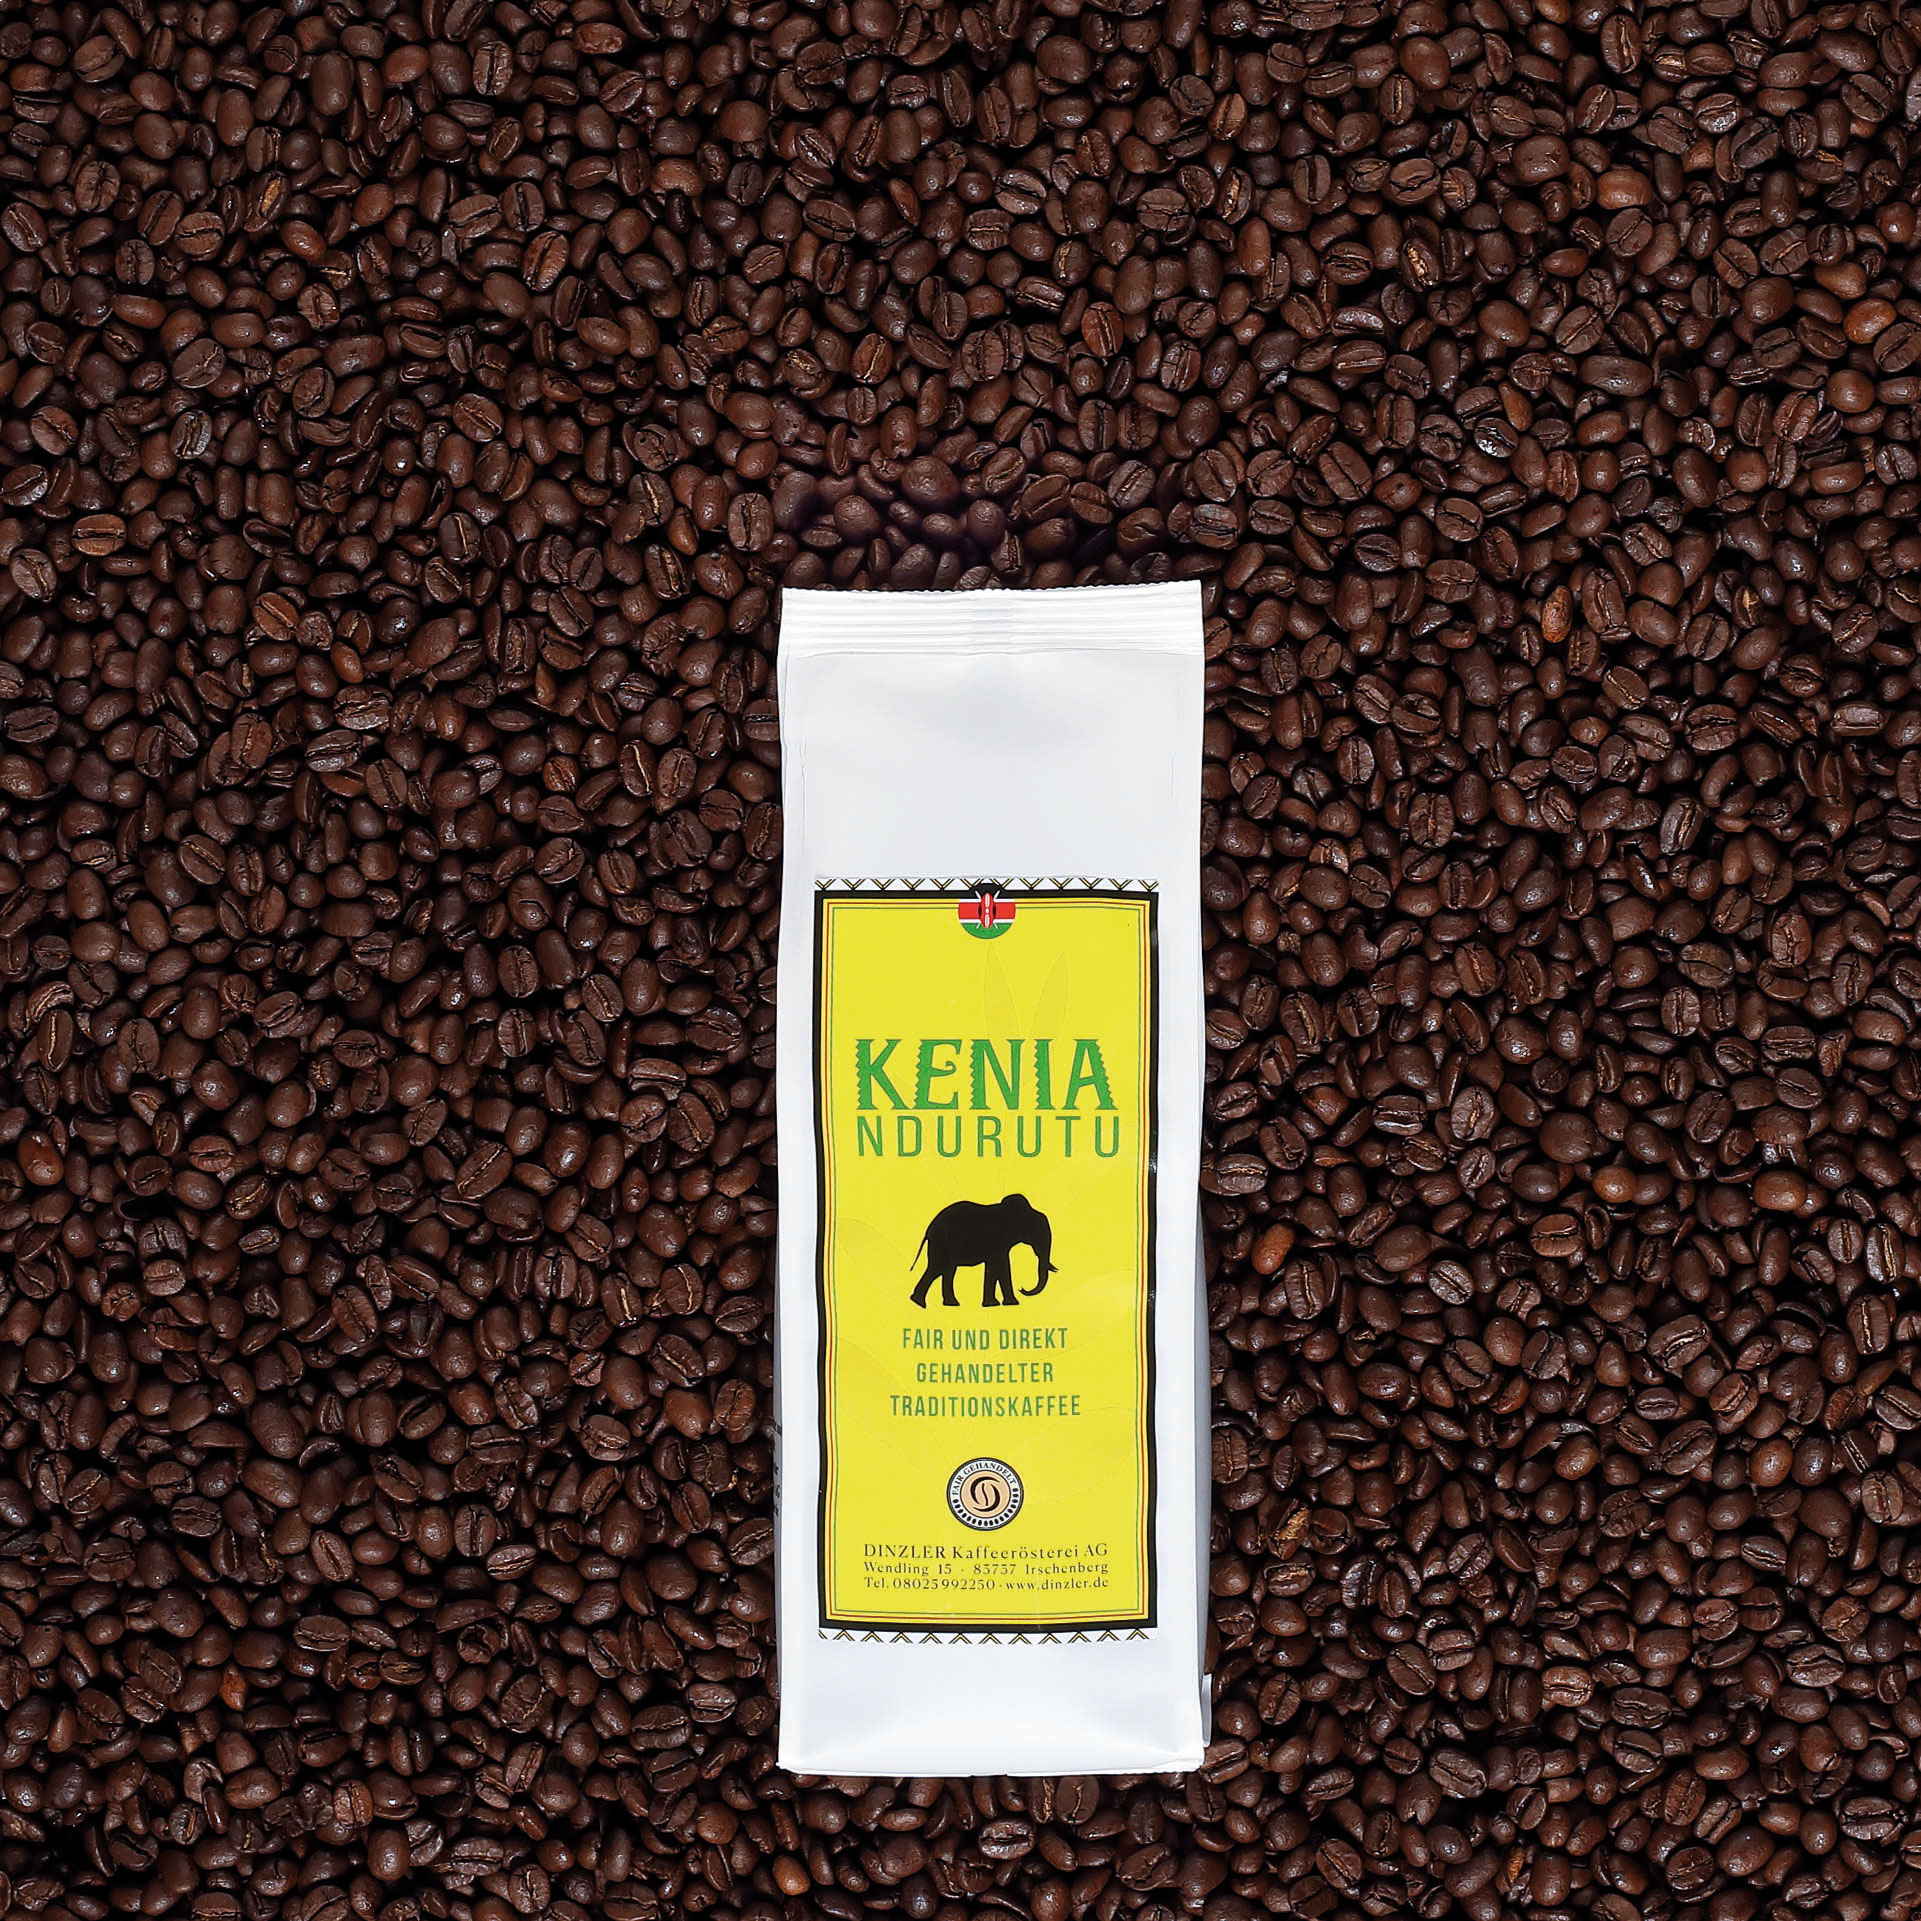 Kaffee Kenia Ndurutu | DINZLER Shop